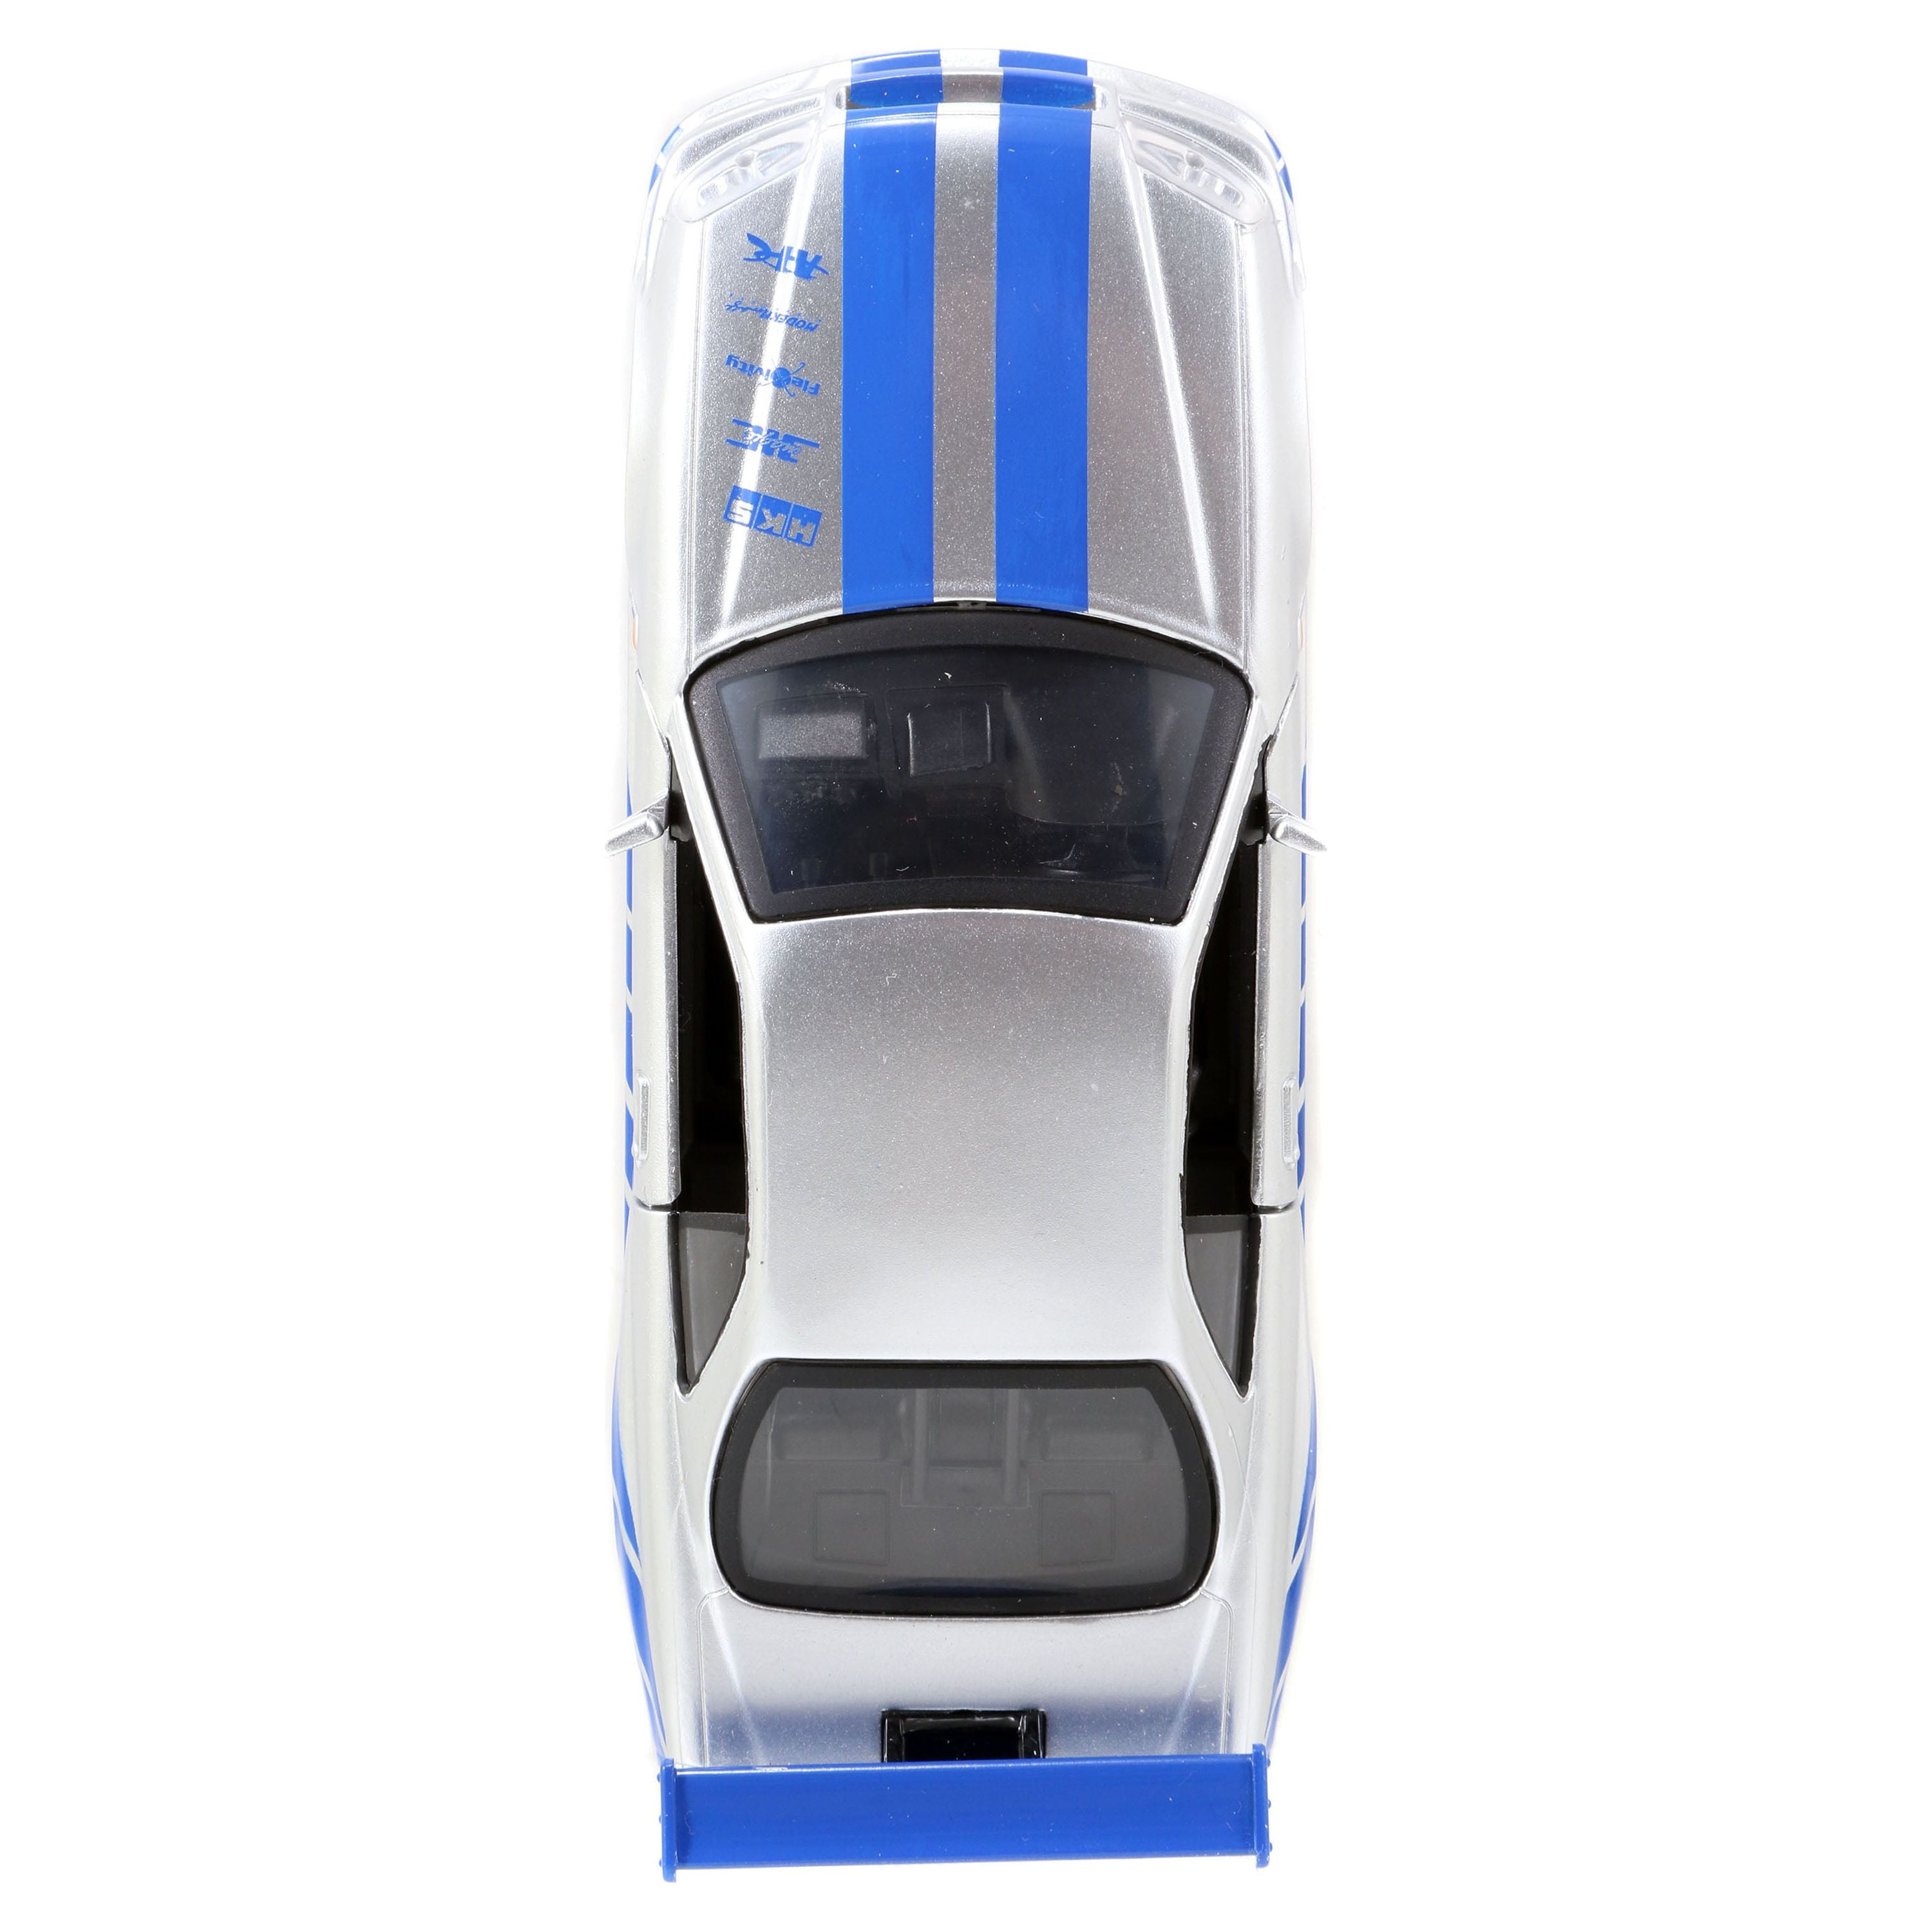 Brian\'s Nissan GTR Skyline R34 Silver/Blue \Fast & Furious\ Movie 1/24  Diecast Model Car by Jada 